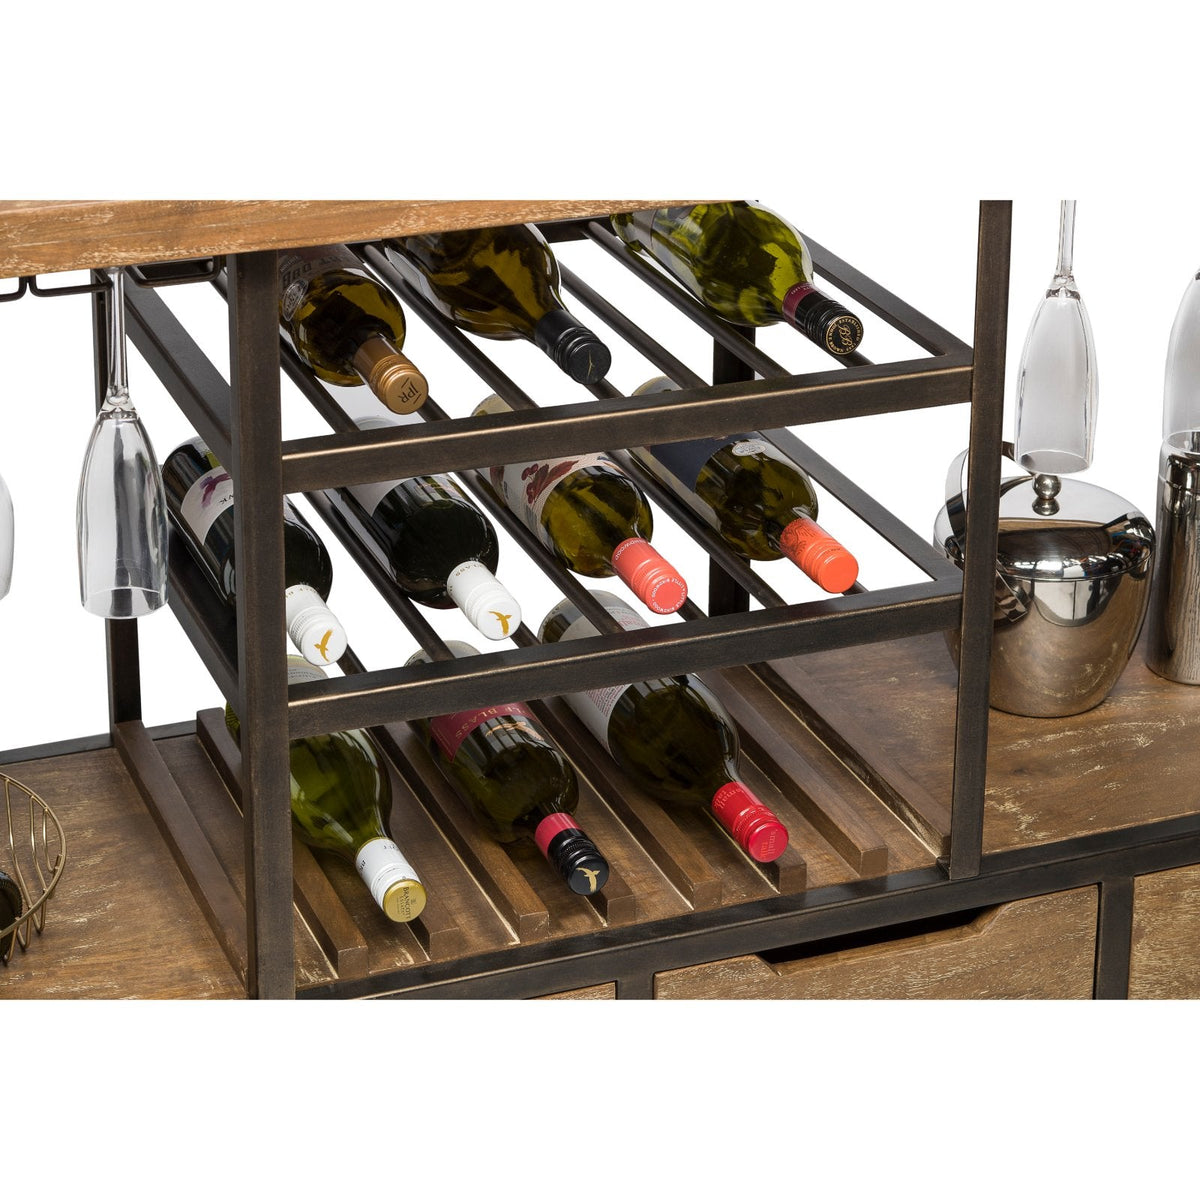 Wooden Bar Cart with Wine Storage